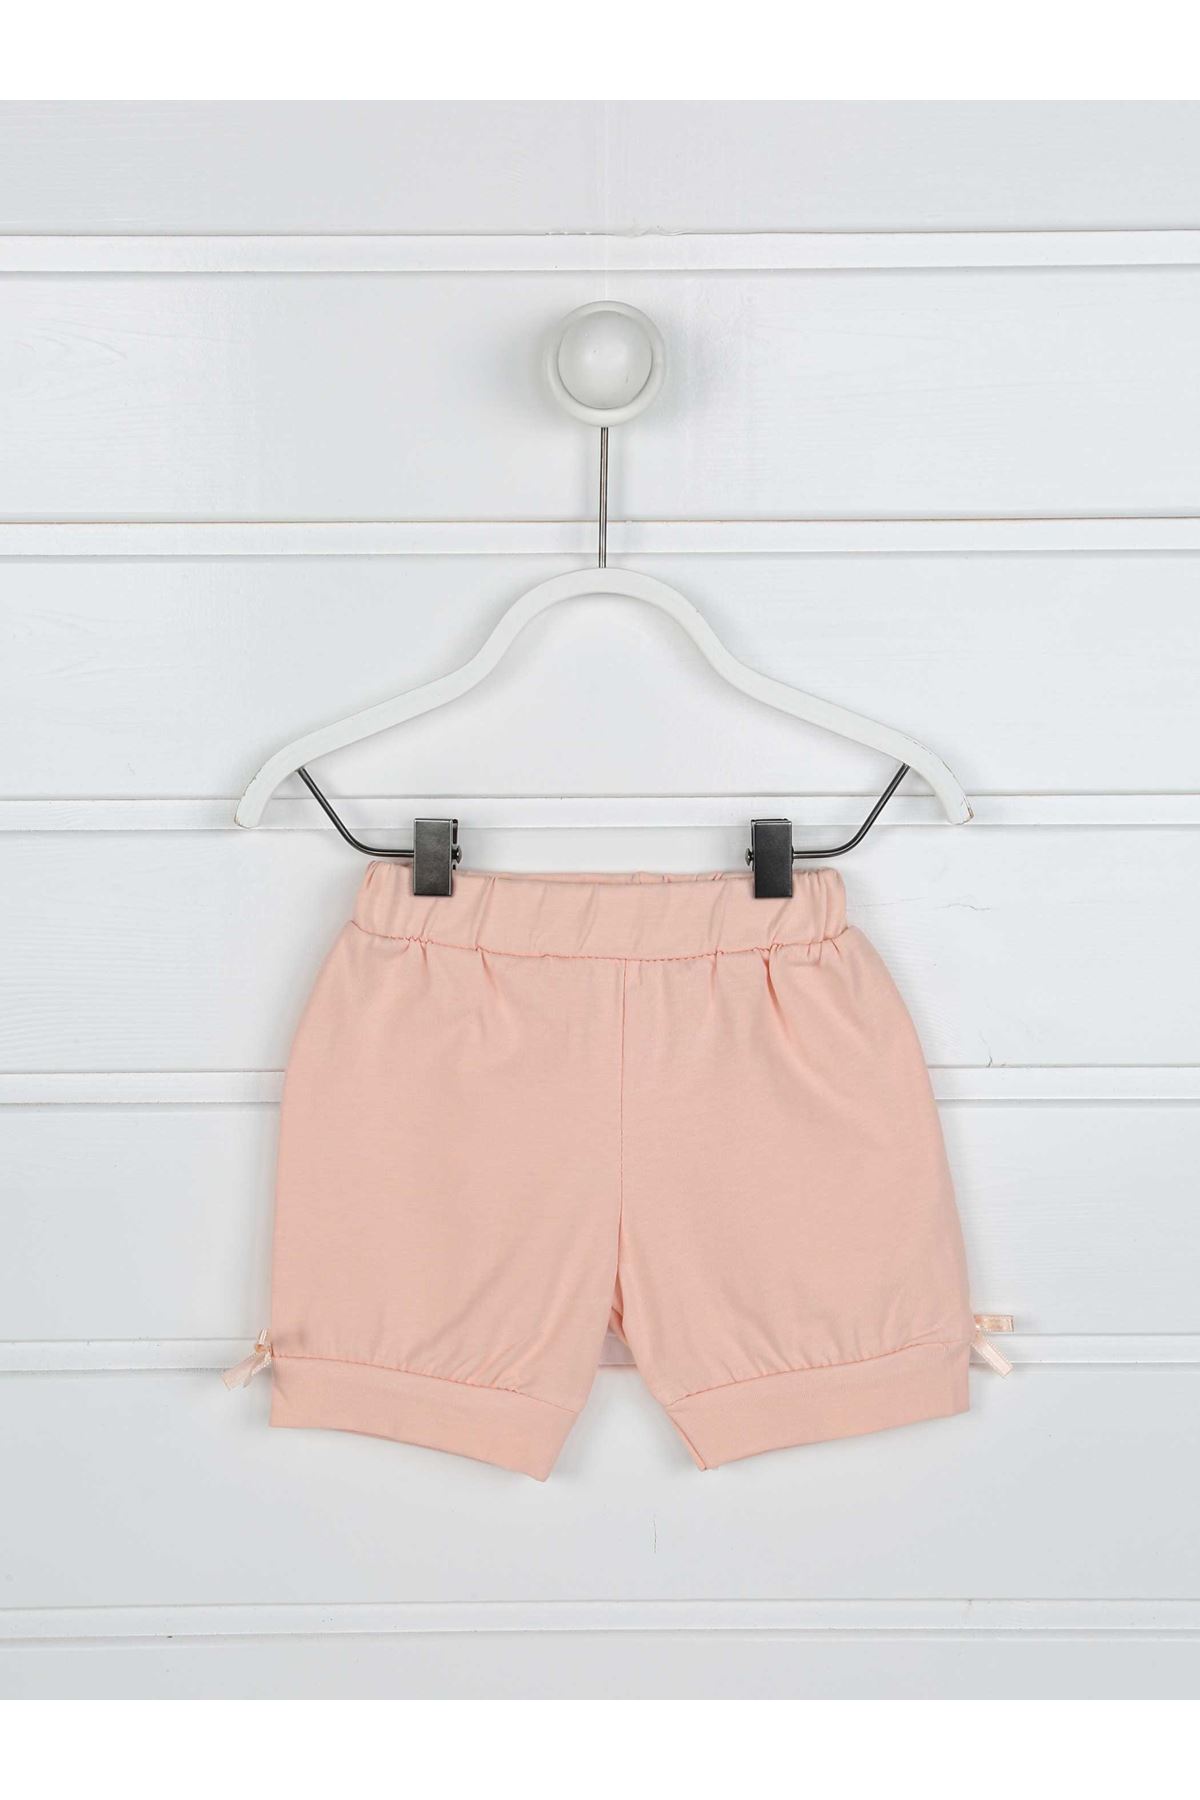 Powder summer baby girl shorts T-shirt 2-piece suit babies models cotton seasonal summer holiday clothes